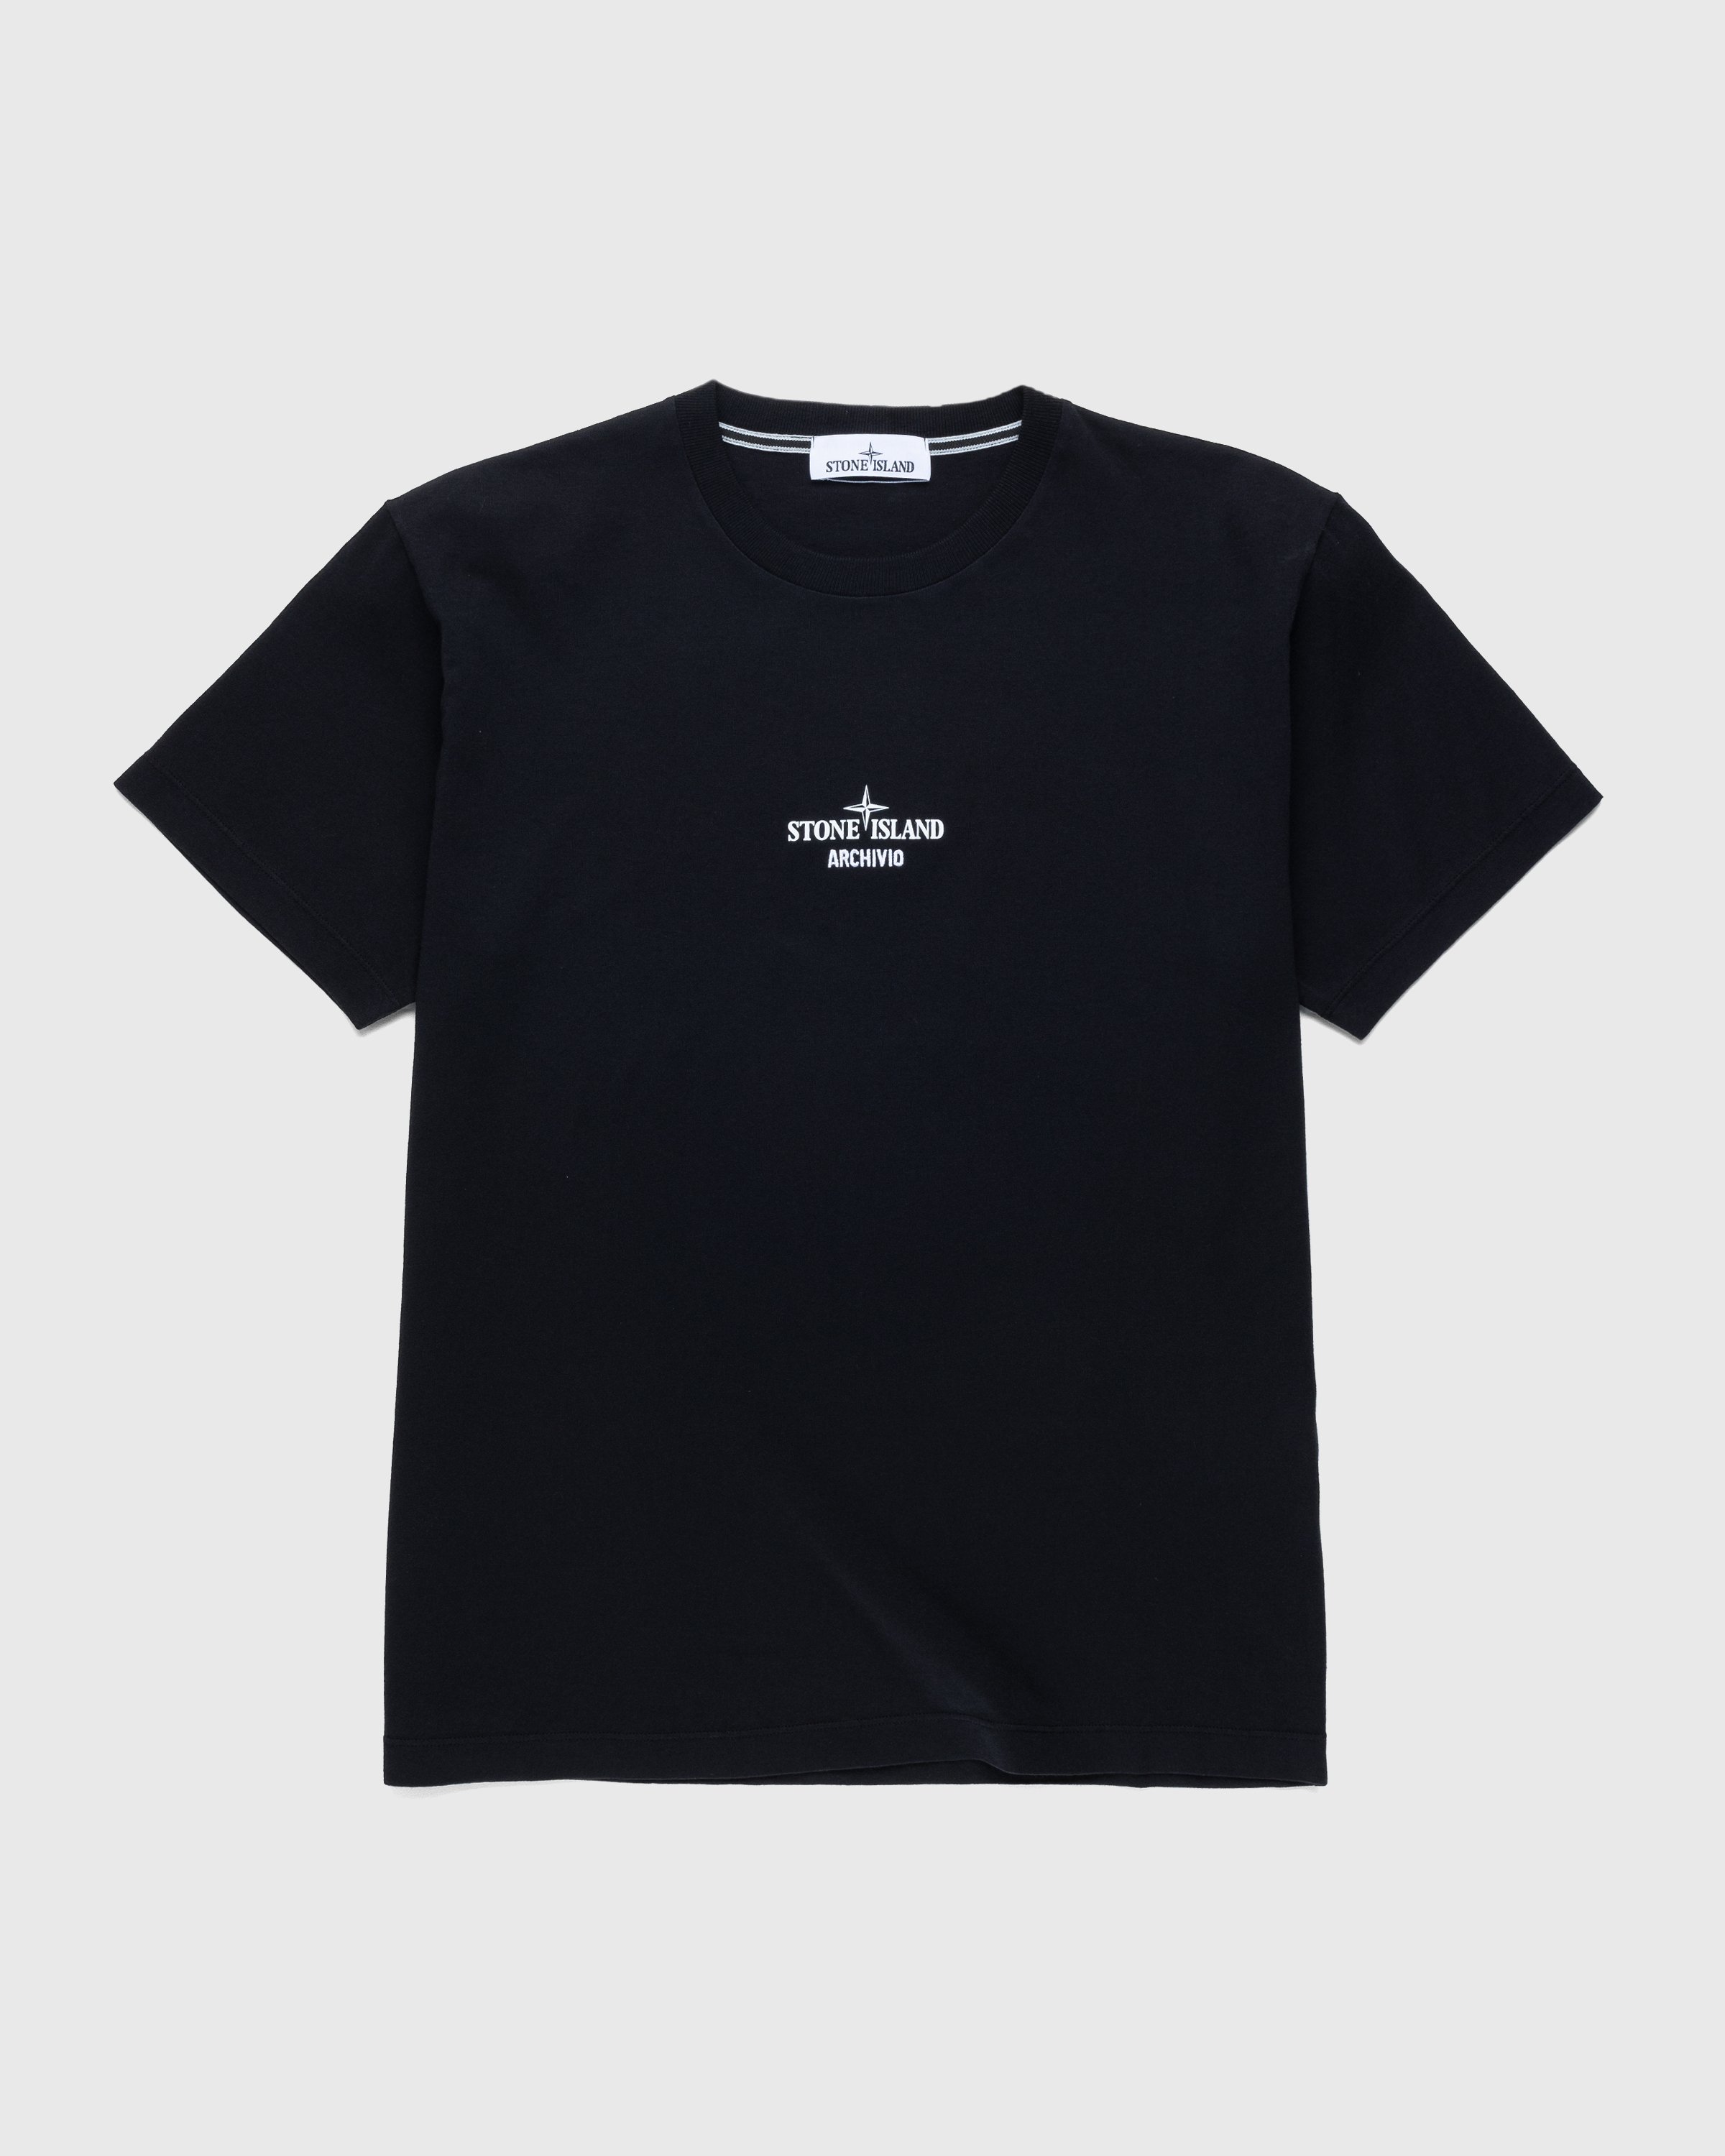 Stone Island – Archivio T-Shirt Black | Highsnobiety Shop